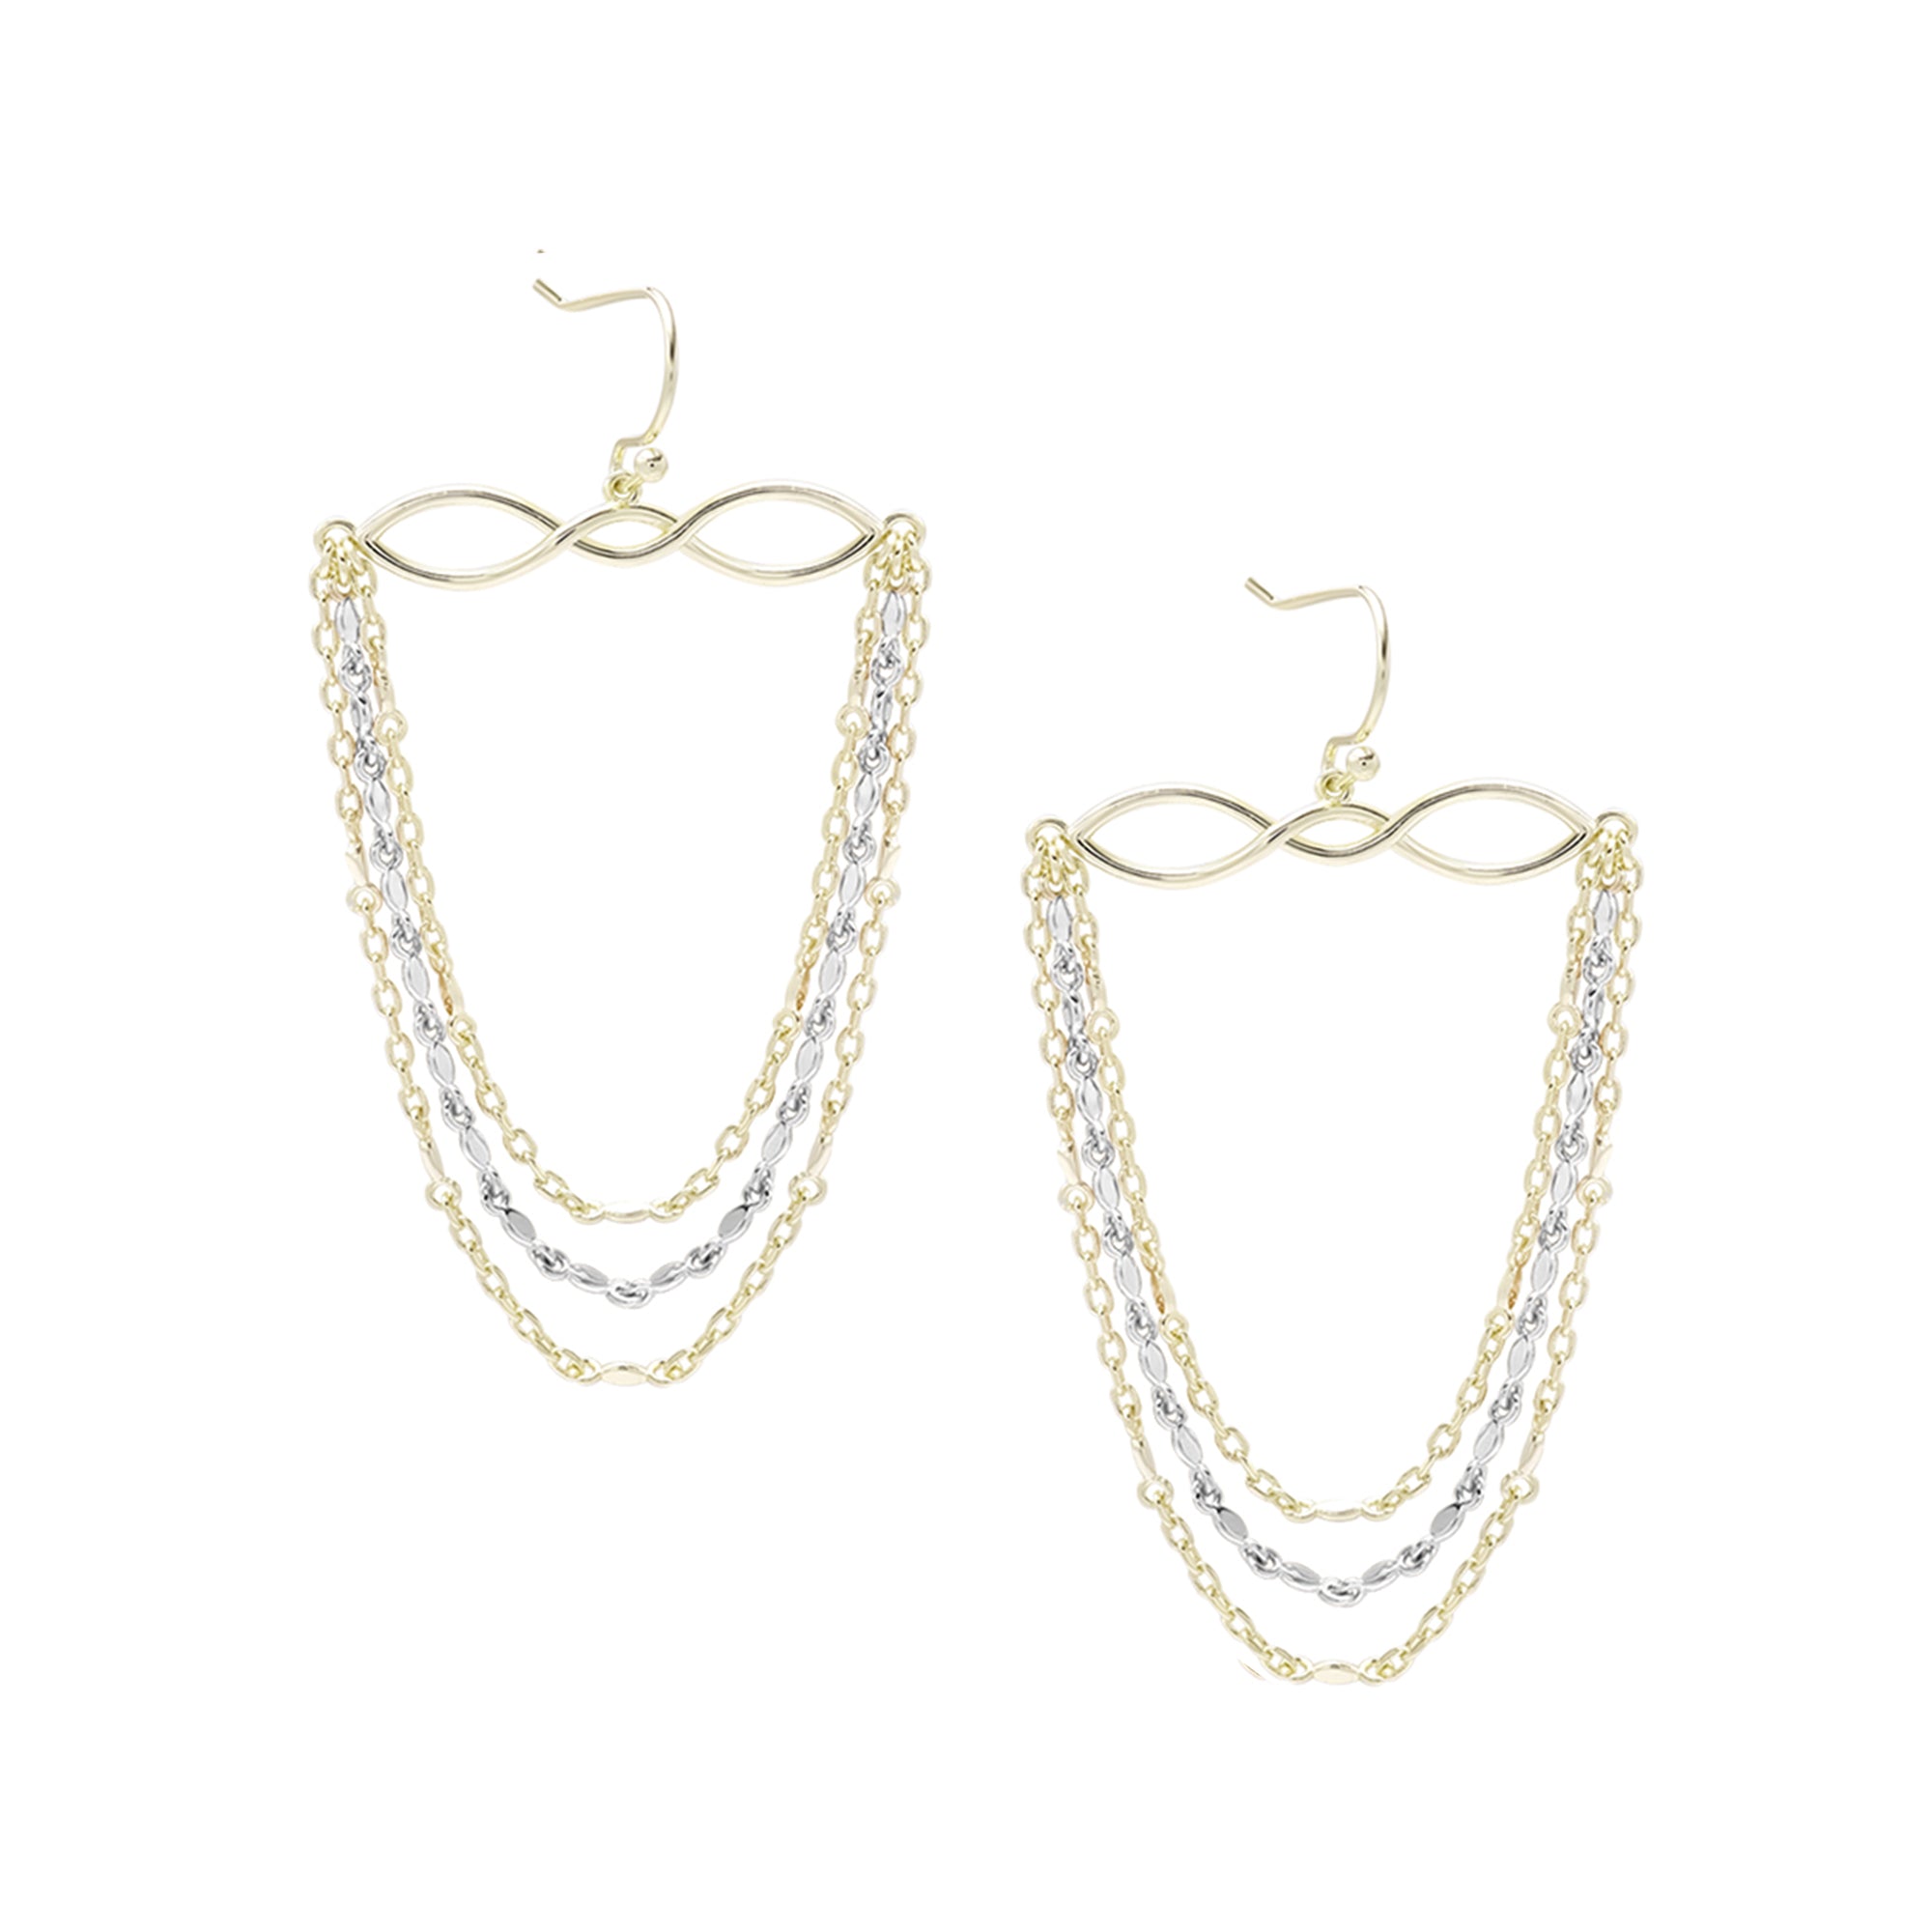 Blossom Earrings in Gold/Silver